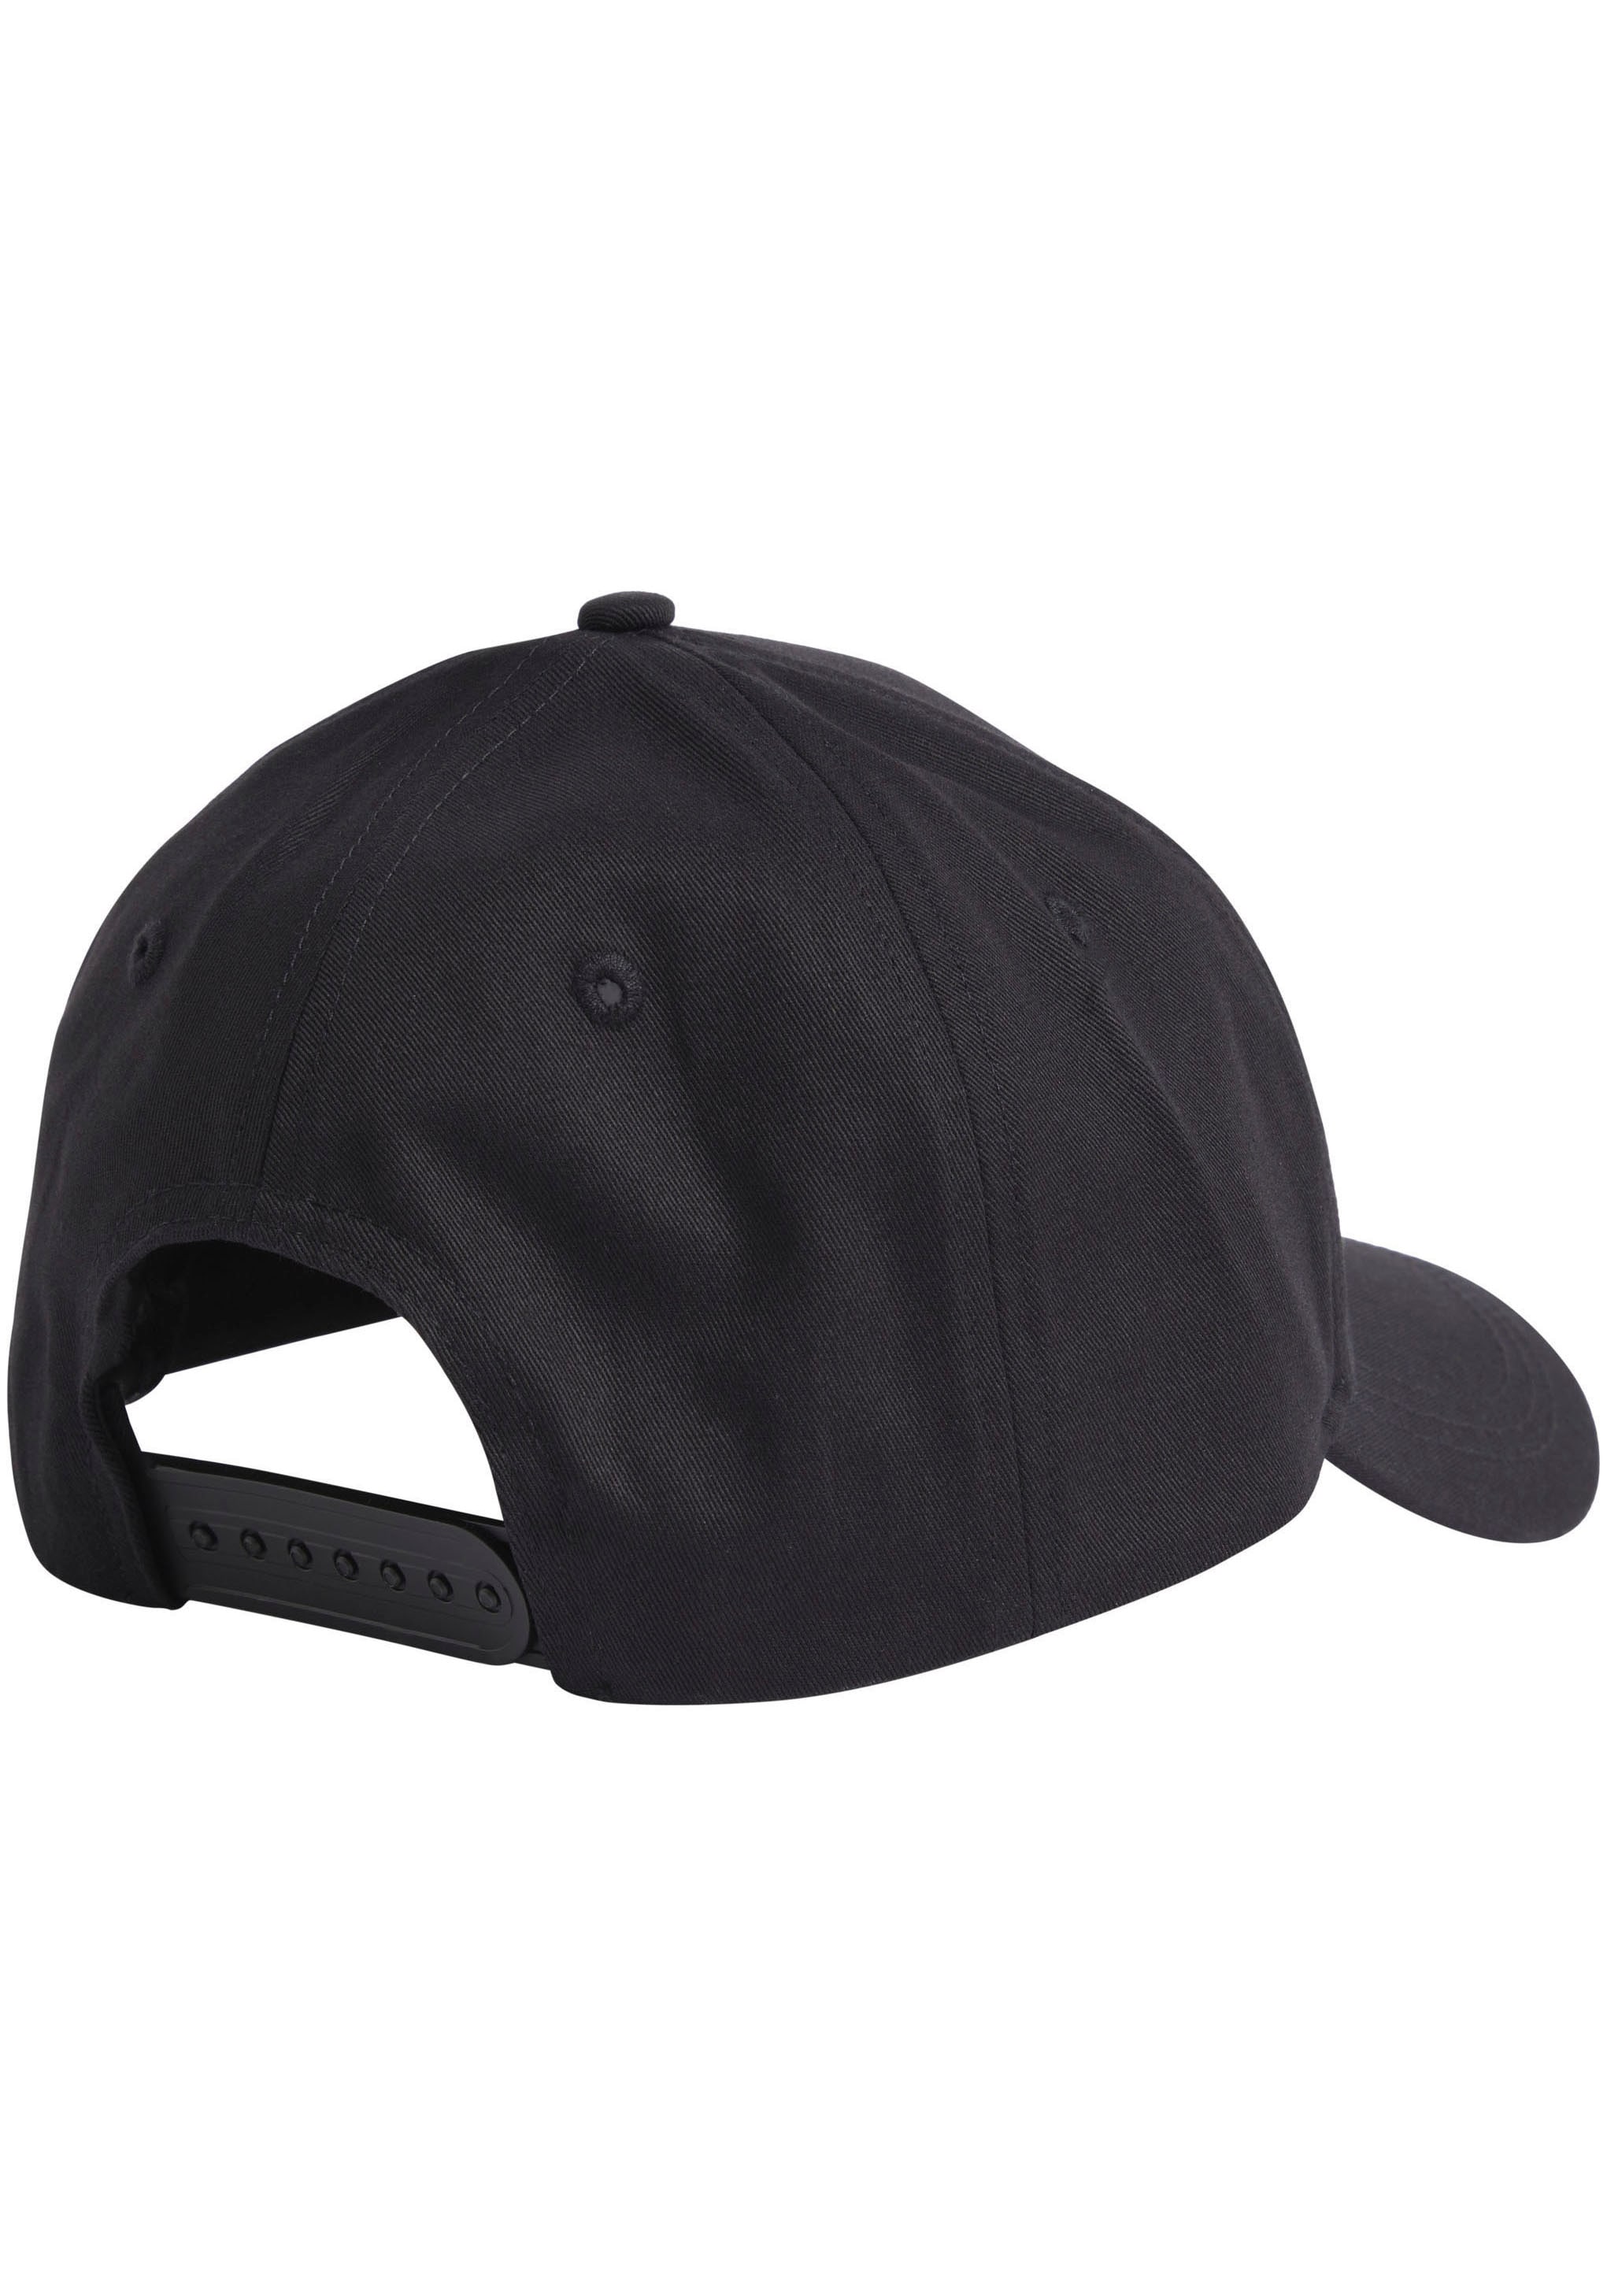 Calvin Klein Jeans Baseball Cap »INSTITUTIONAL CAP«